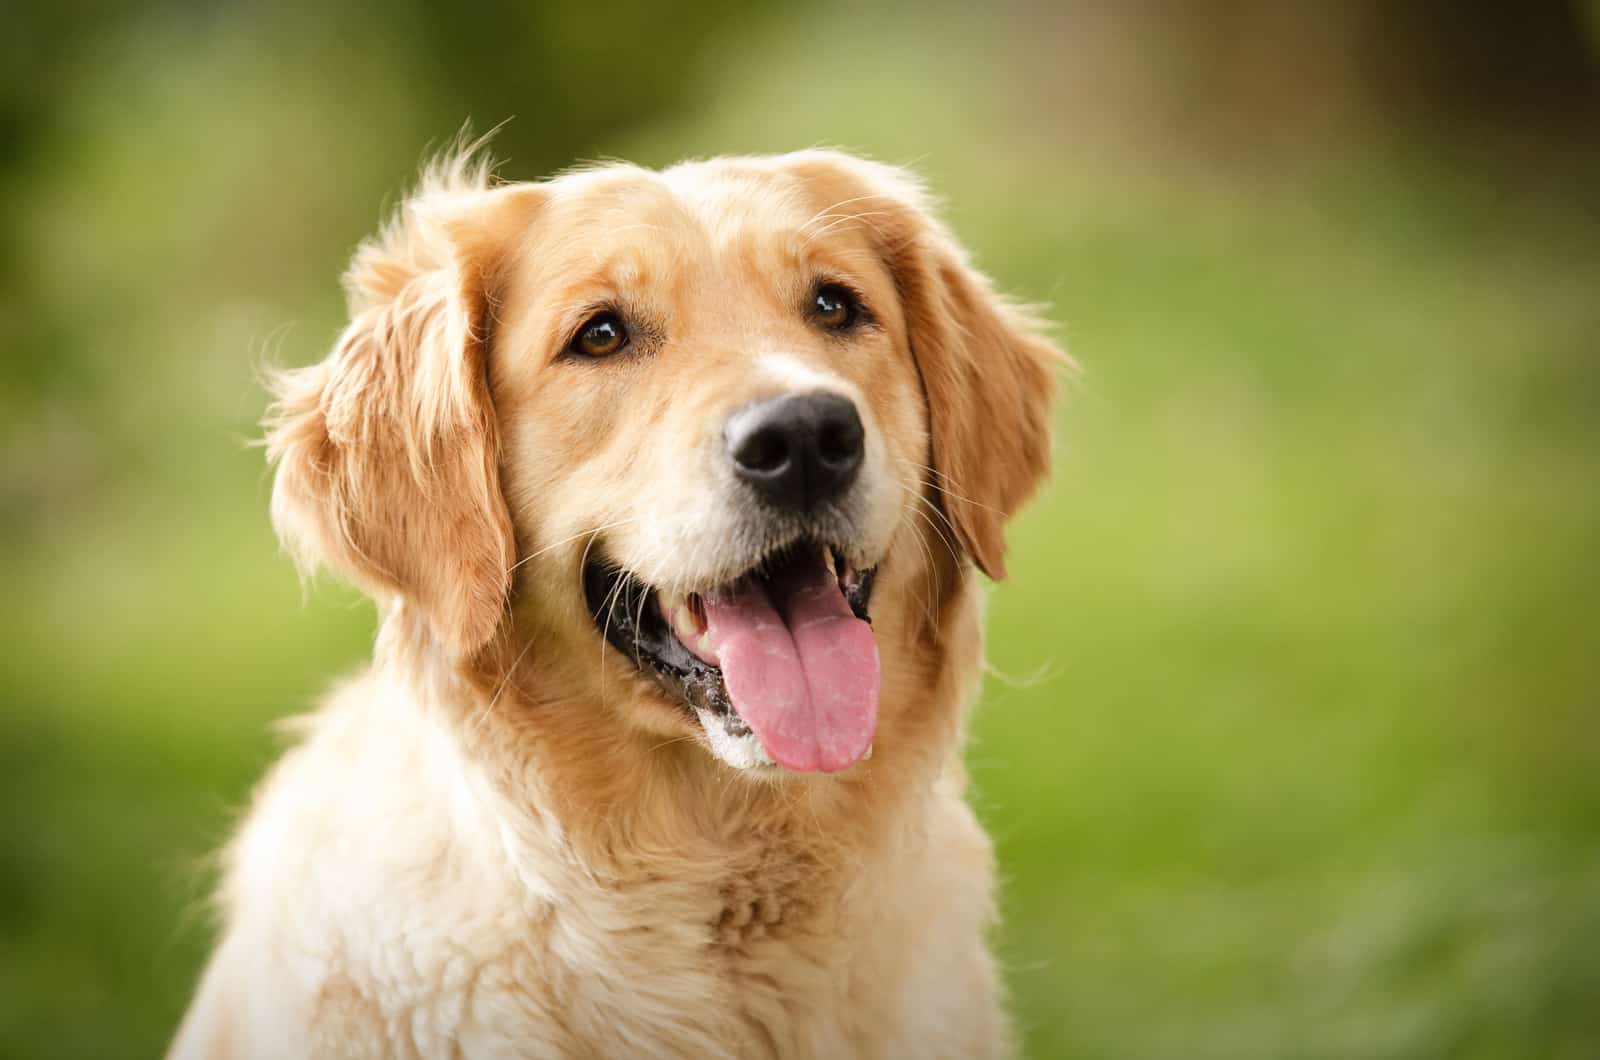 cute golden retriever dog